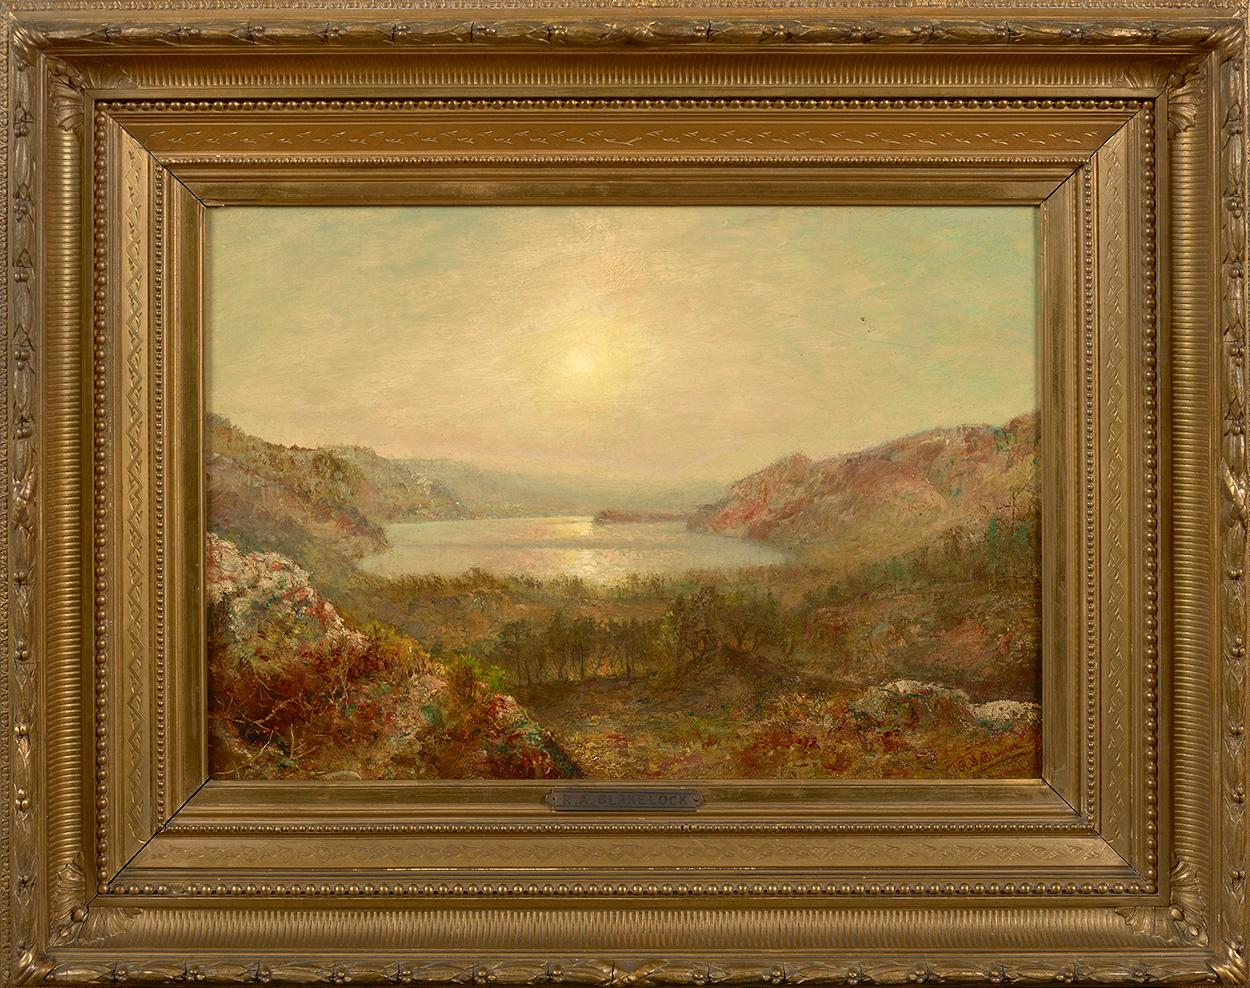 The Mountain Lake - Painting by Ralph Albert Blakelock